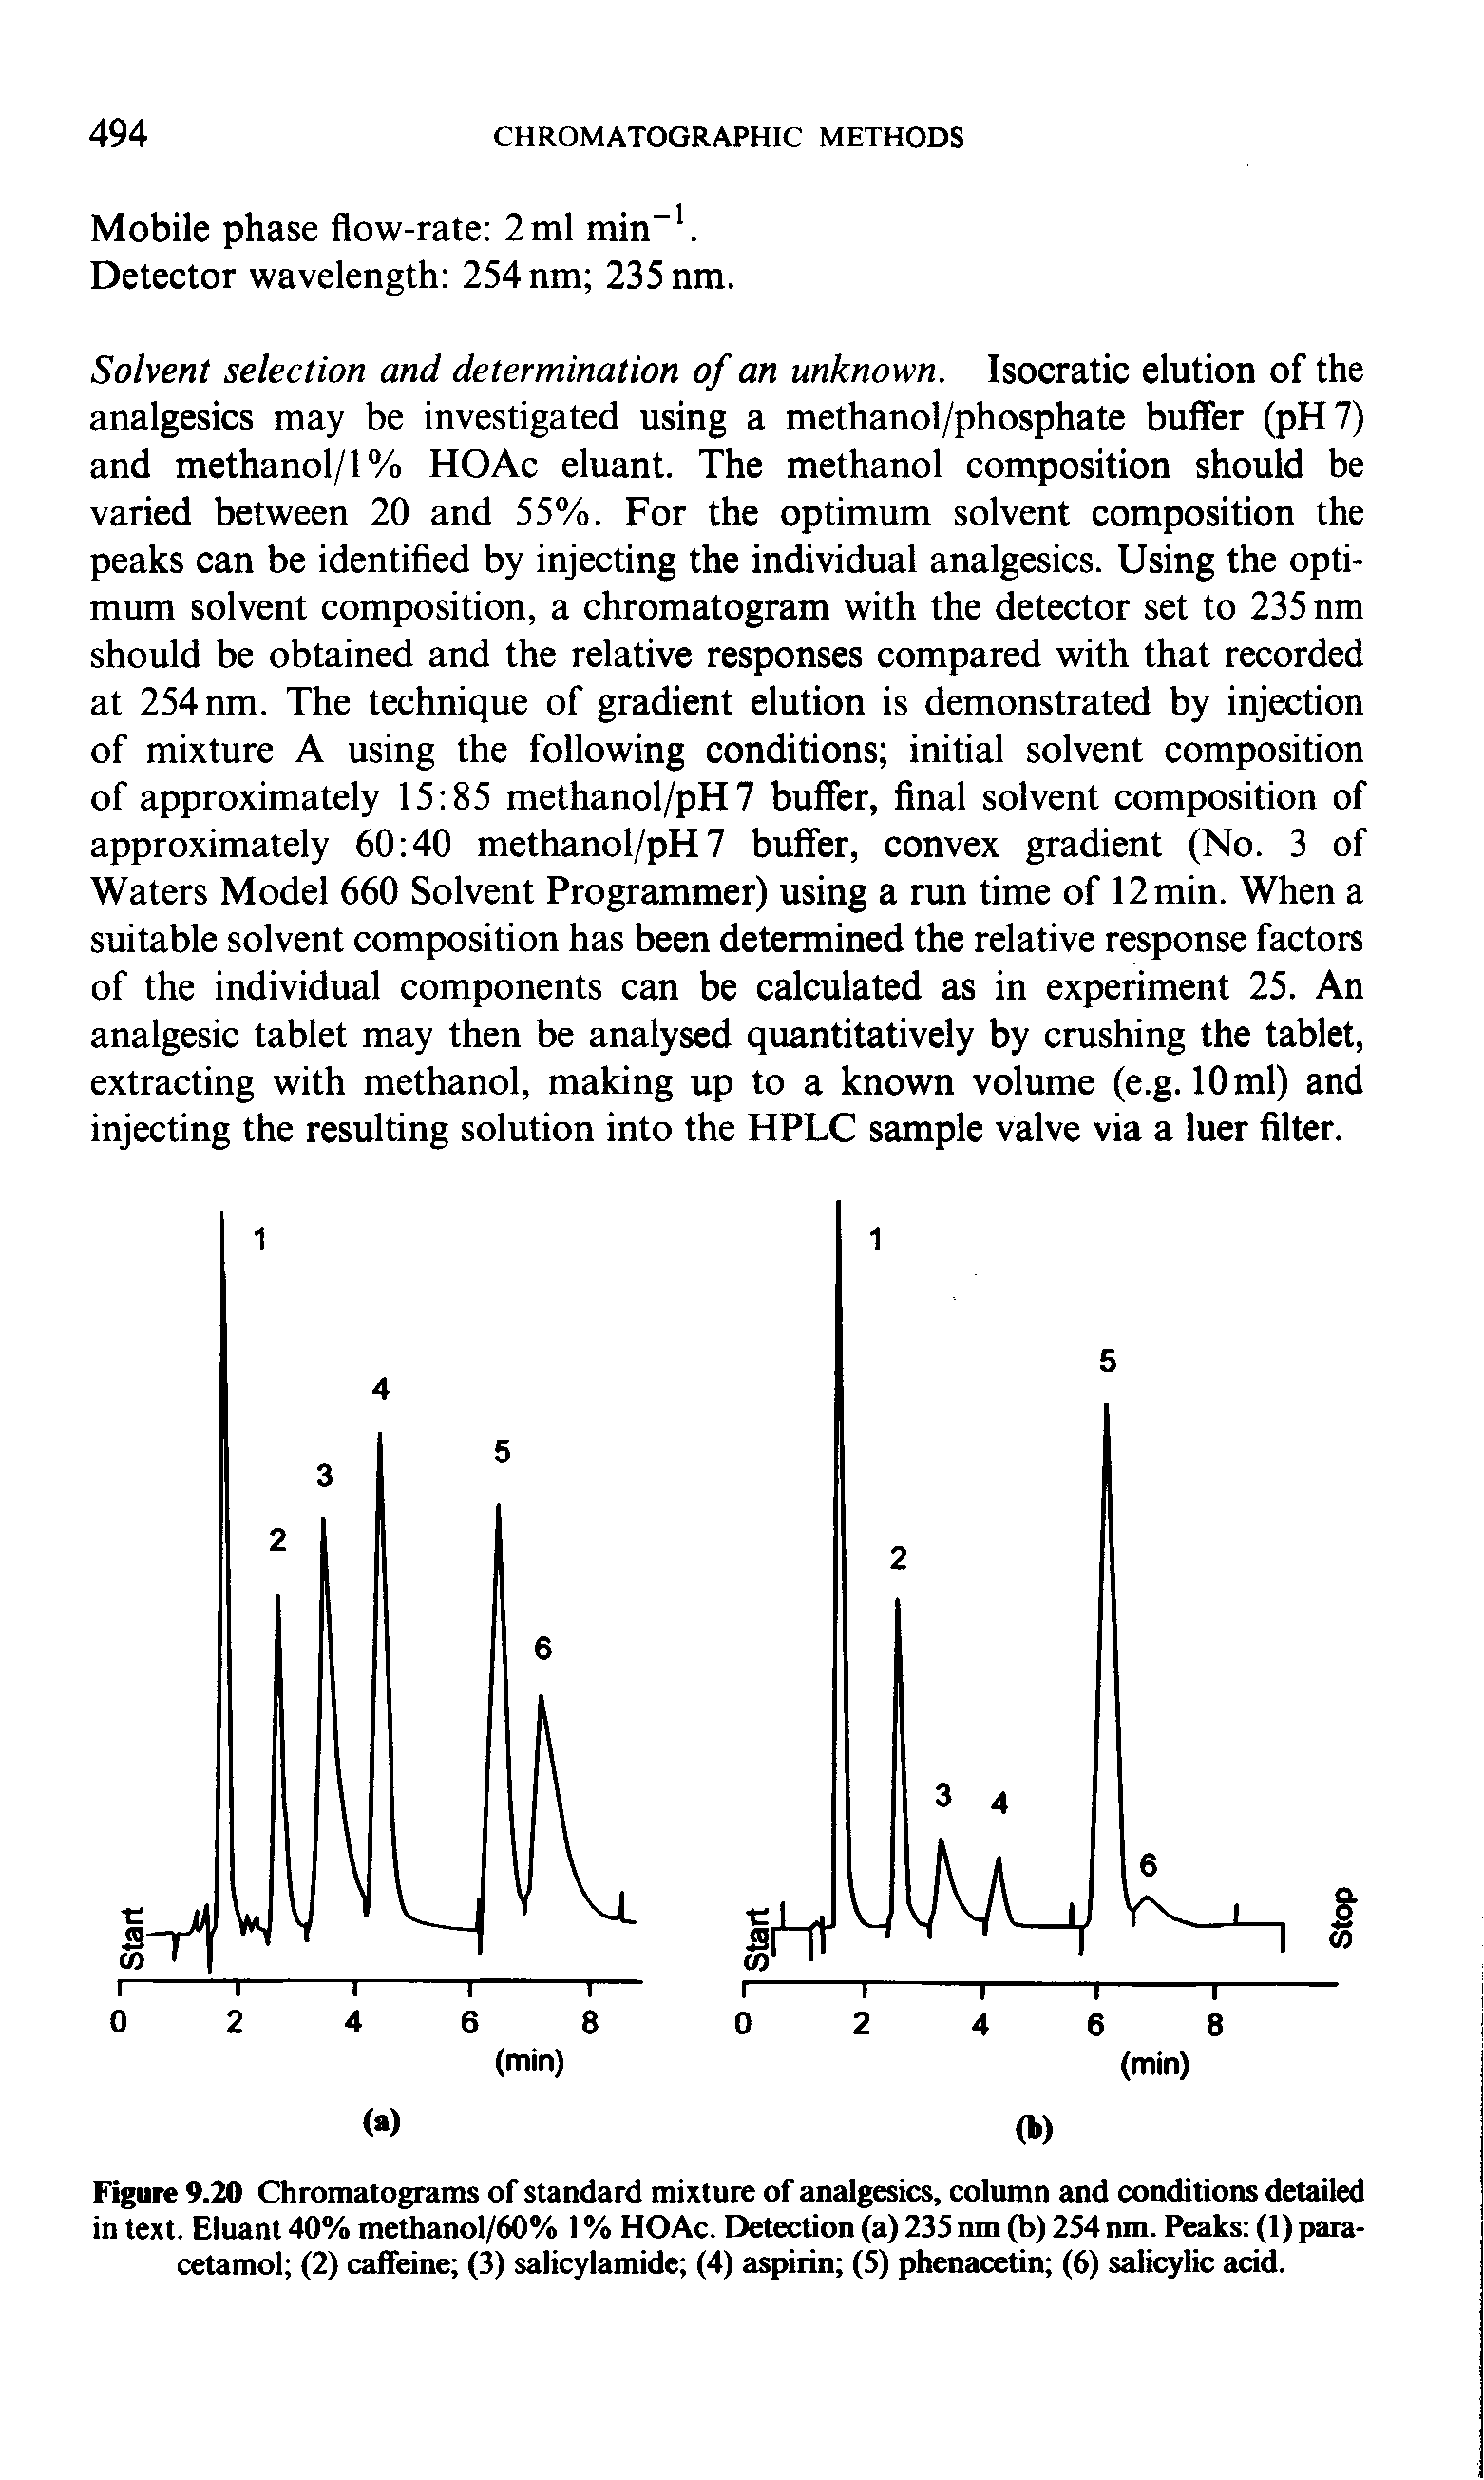 Figure 9.20 Chromatograms of standard mixture of analgesics, column and conditions detailed in text. Eluant 40% methanol/60% 1 % HOAc. Detection (a) 235 nm (b) 254 nm. Peaks (1) paracetamol (2) caffeine (3) salicylamide (4) aspirin (5) phenacetin (6) salicylic acid.